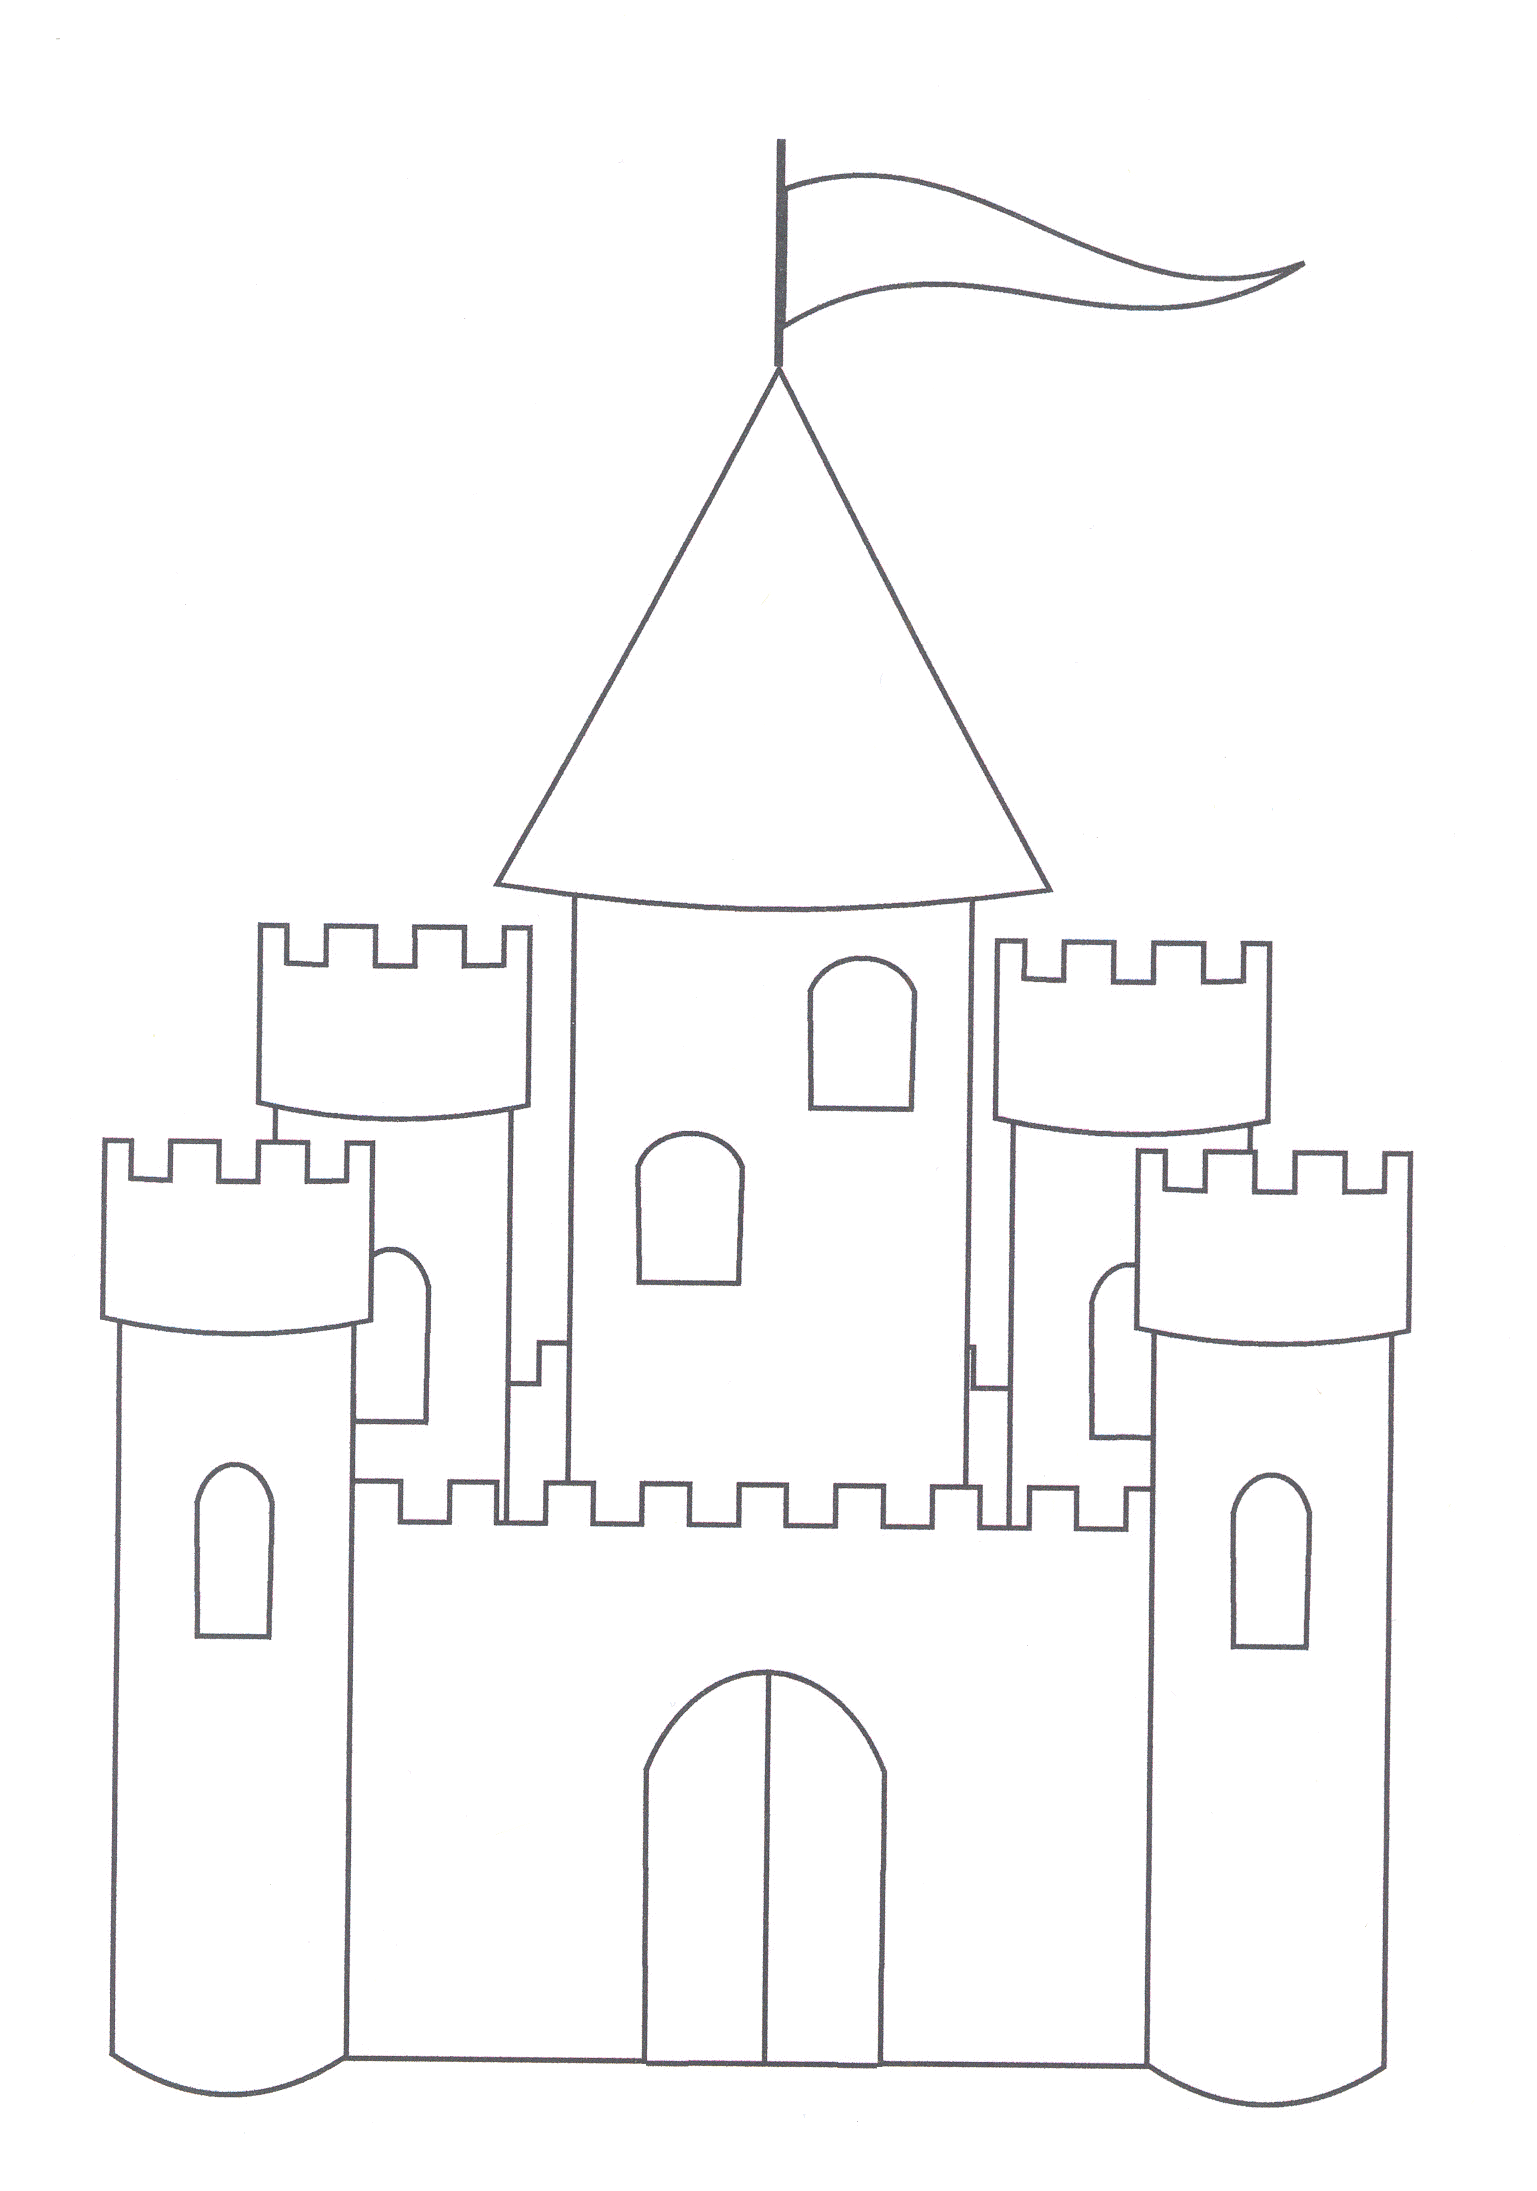 Image #19331 - Coloriage château gratuit